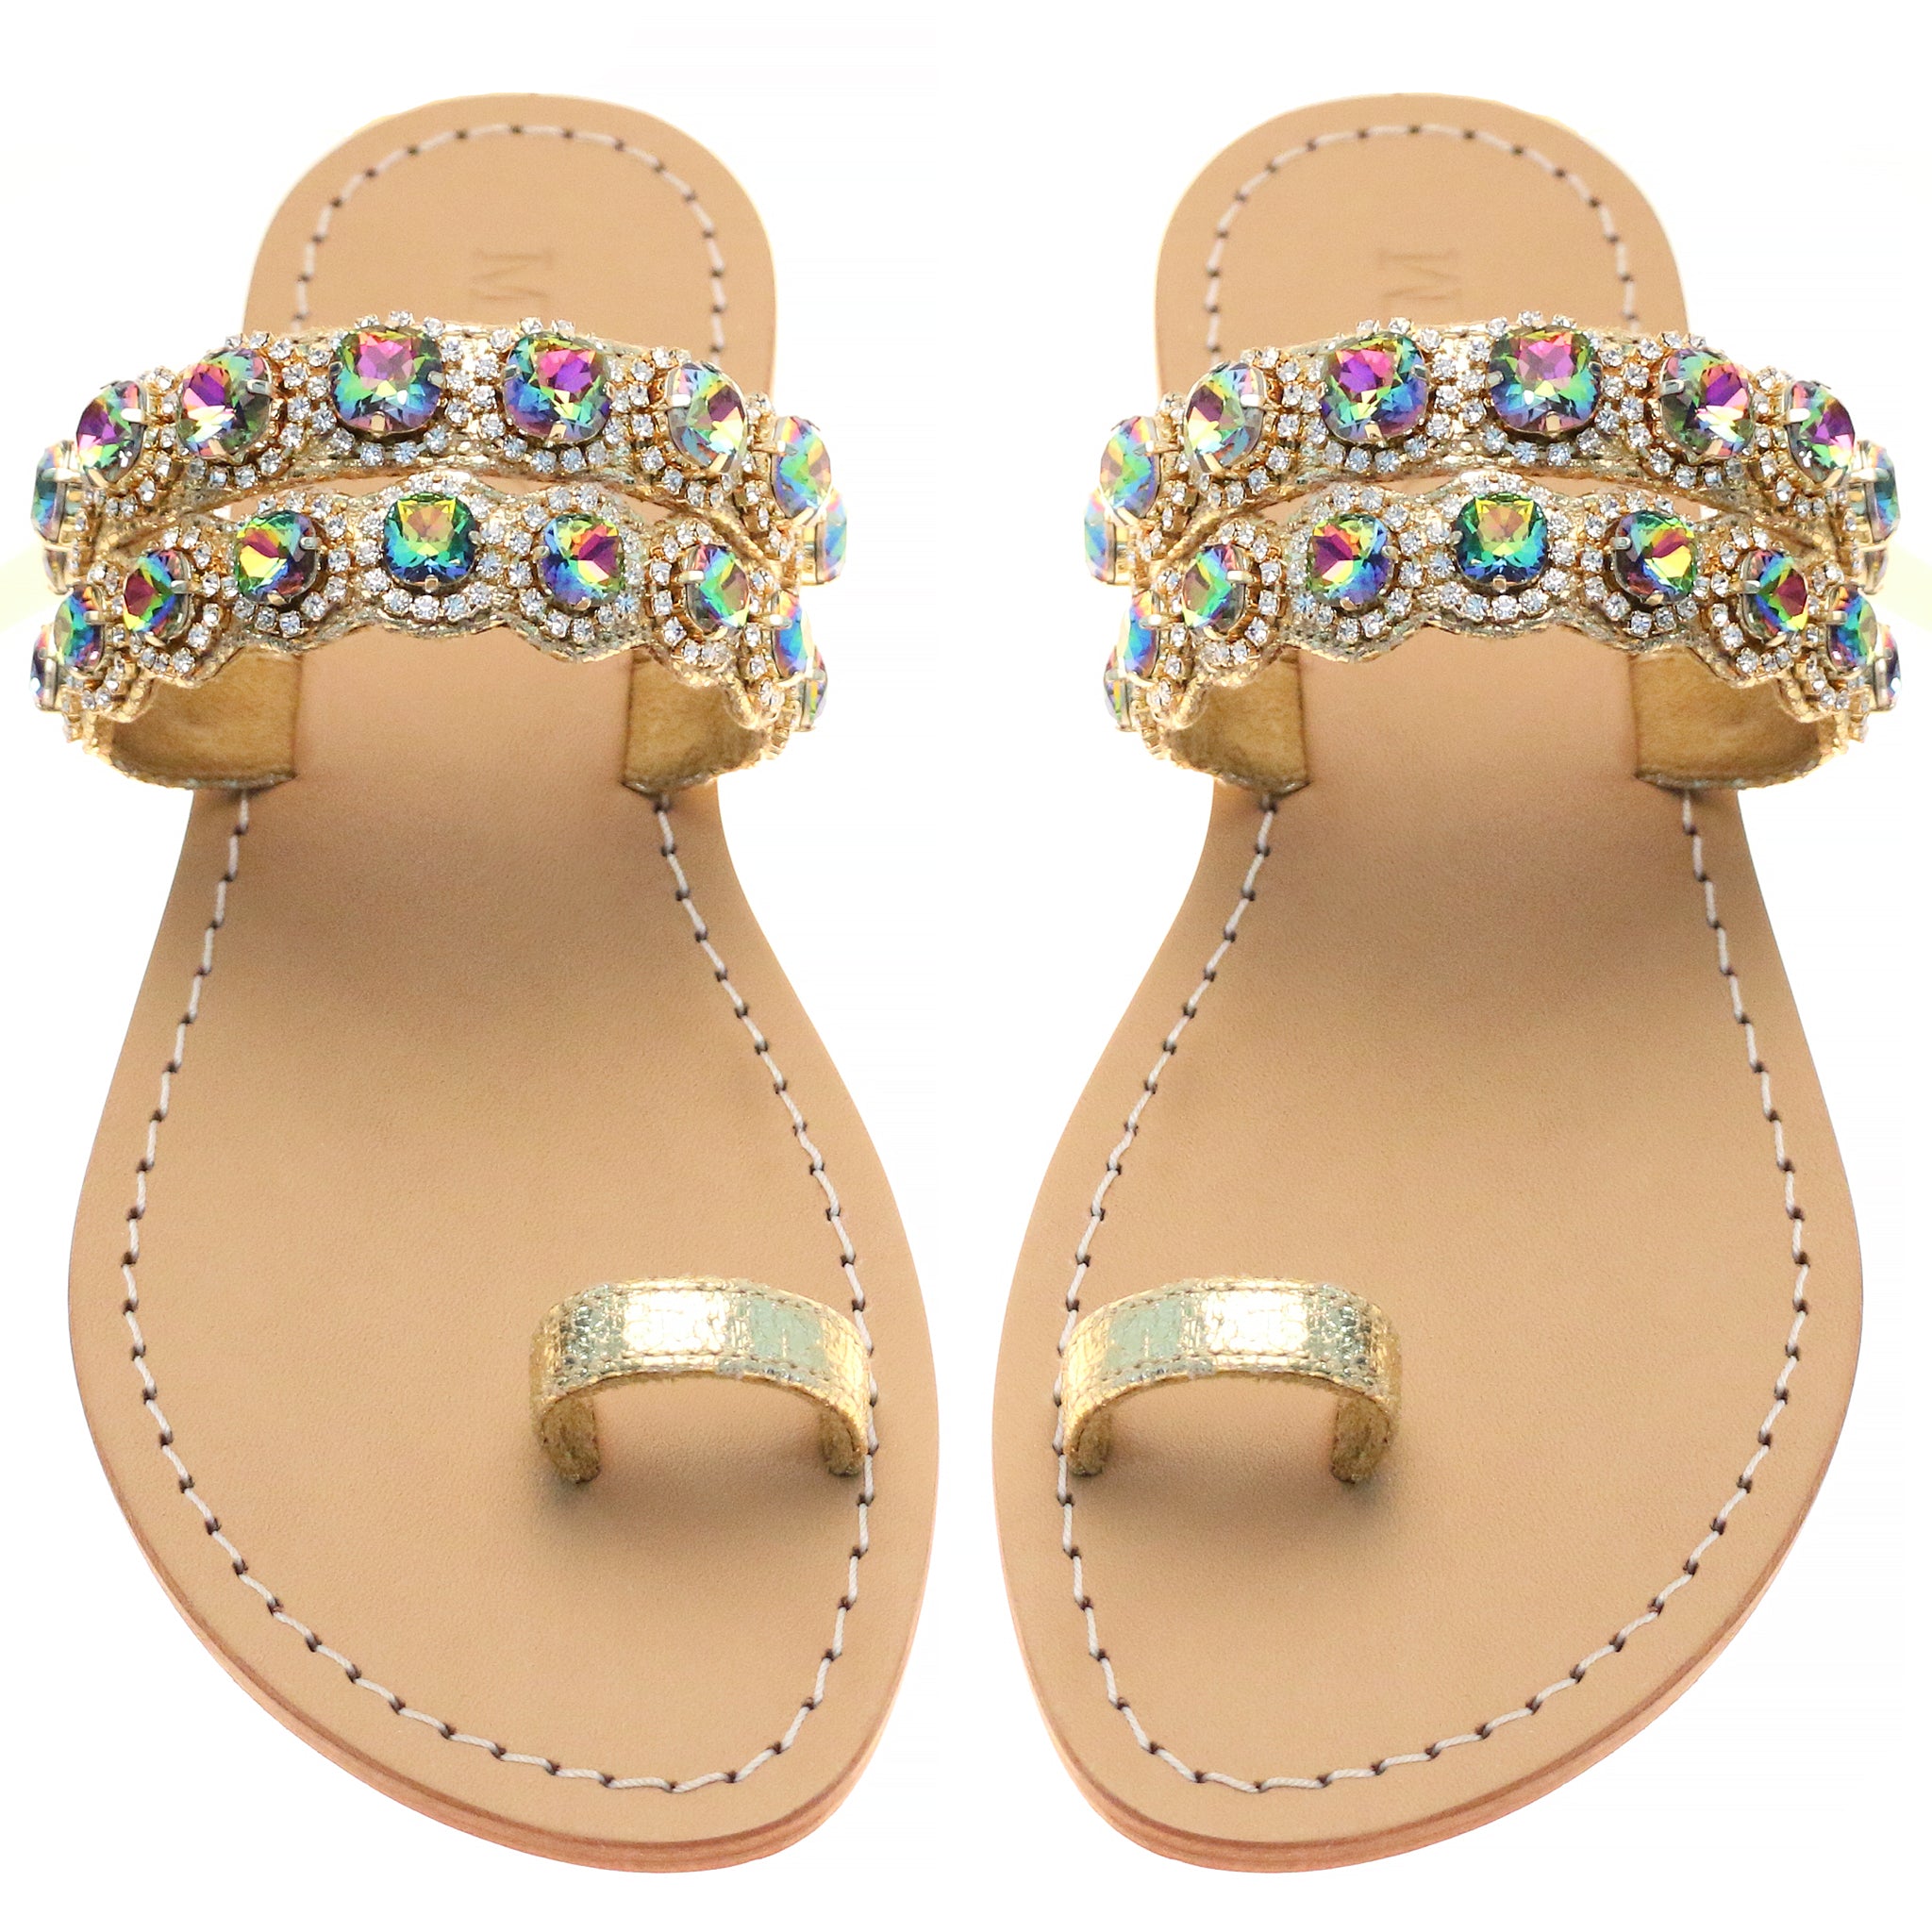 Monserrat - Women's Jeweled & Embellished Sandals | Mystique Sandals